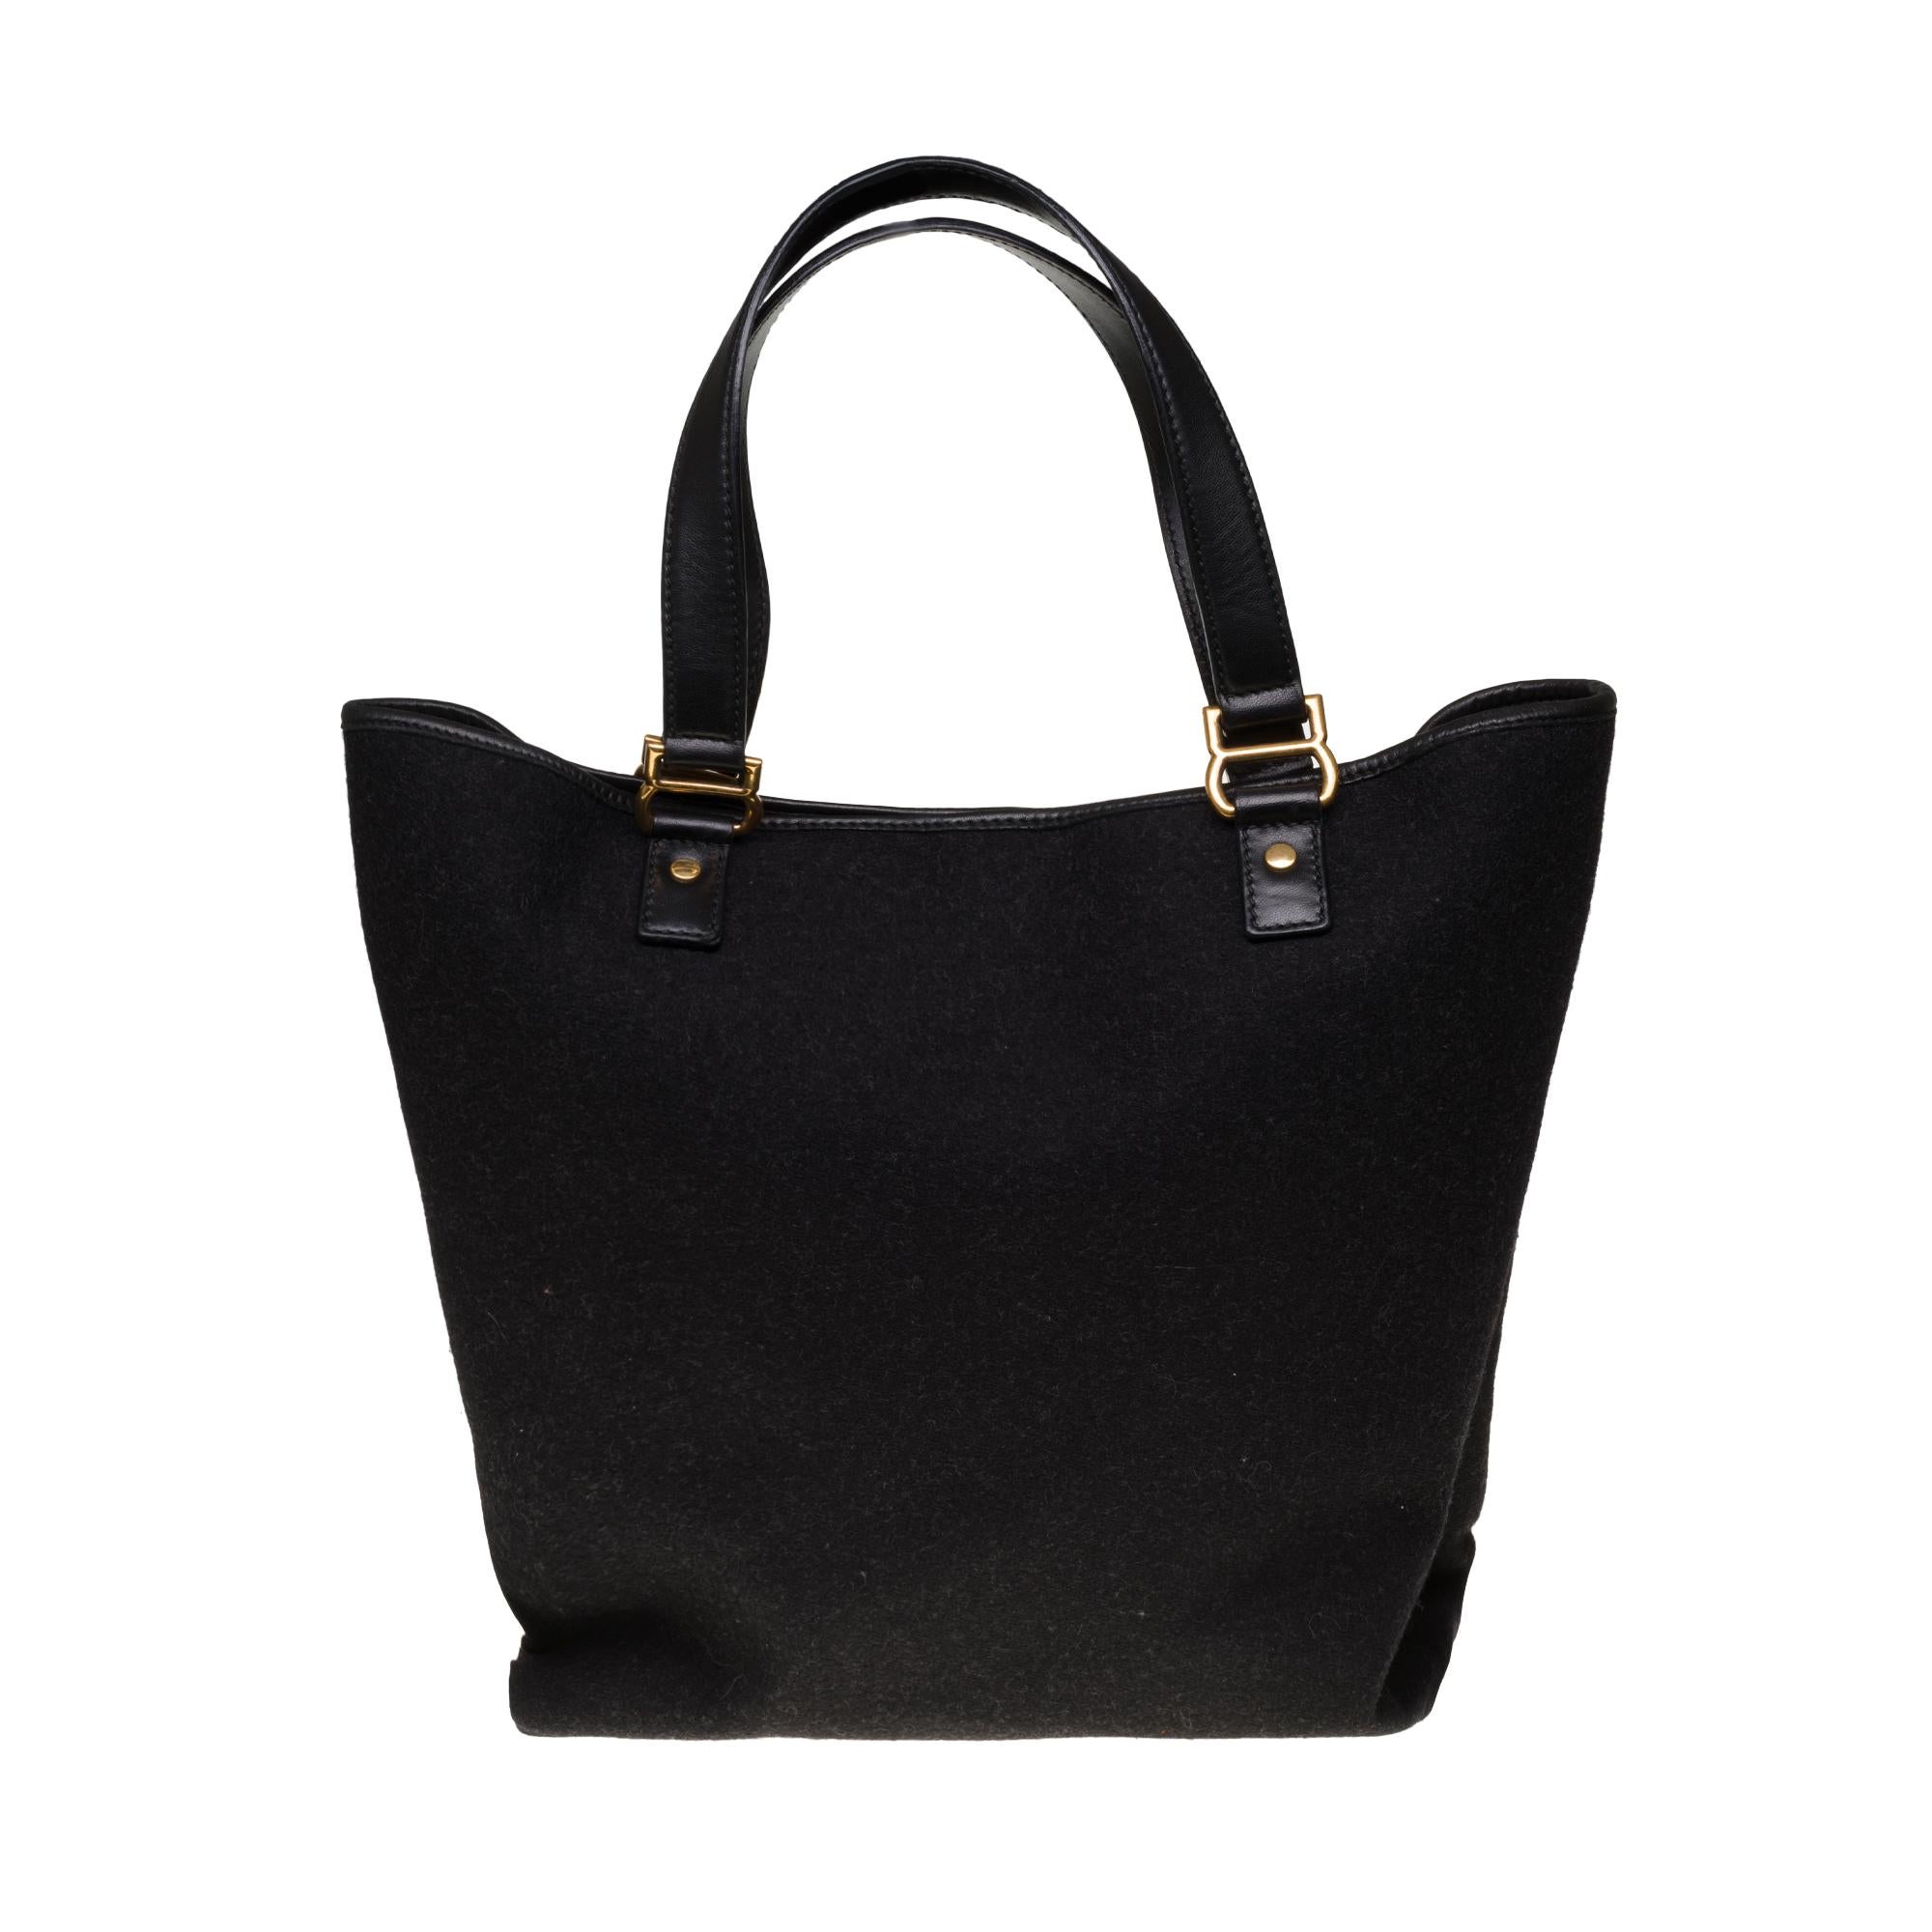 The practical Yves Saint Laurent Kahala black wool tote bag with grey monogram print.
Black canvas interior, 1 laptop pocket, 1 zipped pocket.
Signature: 